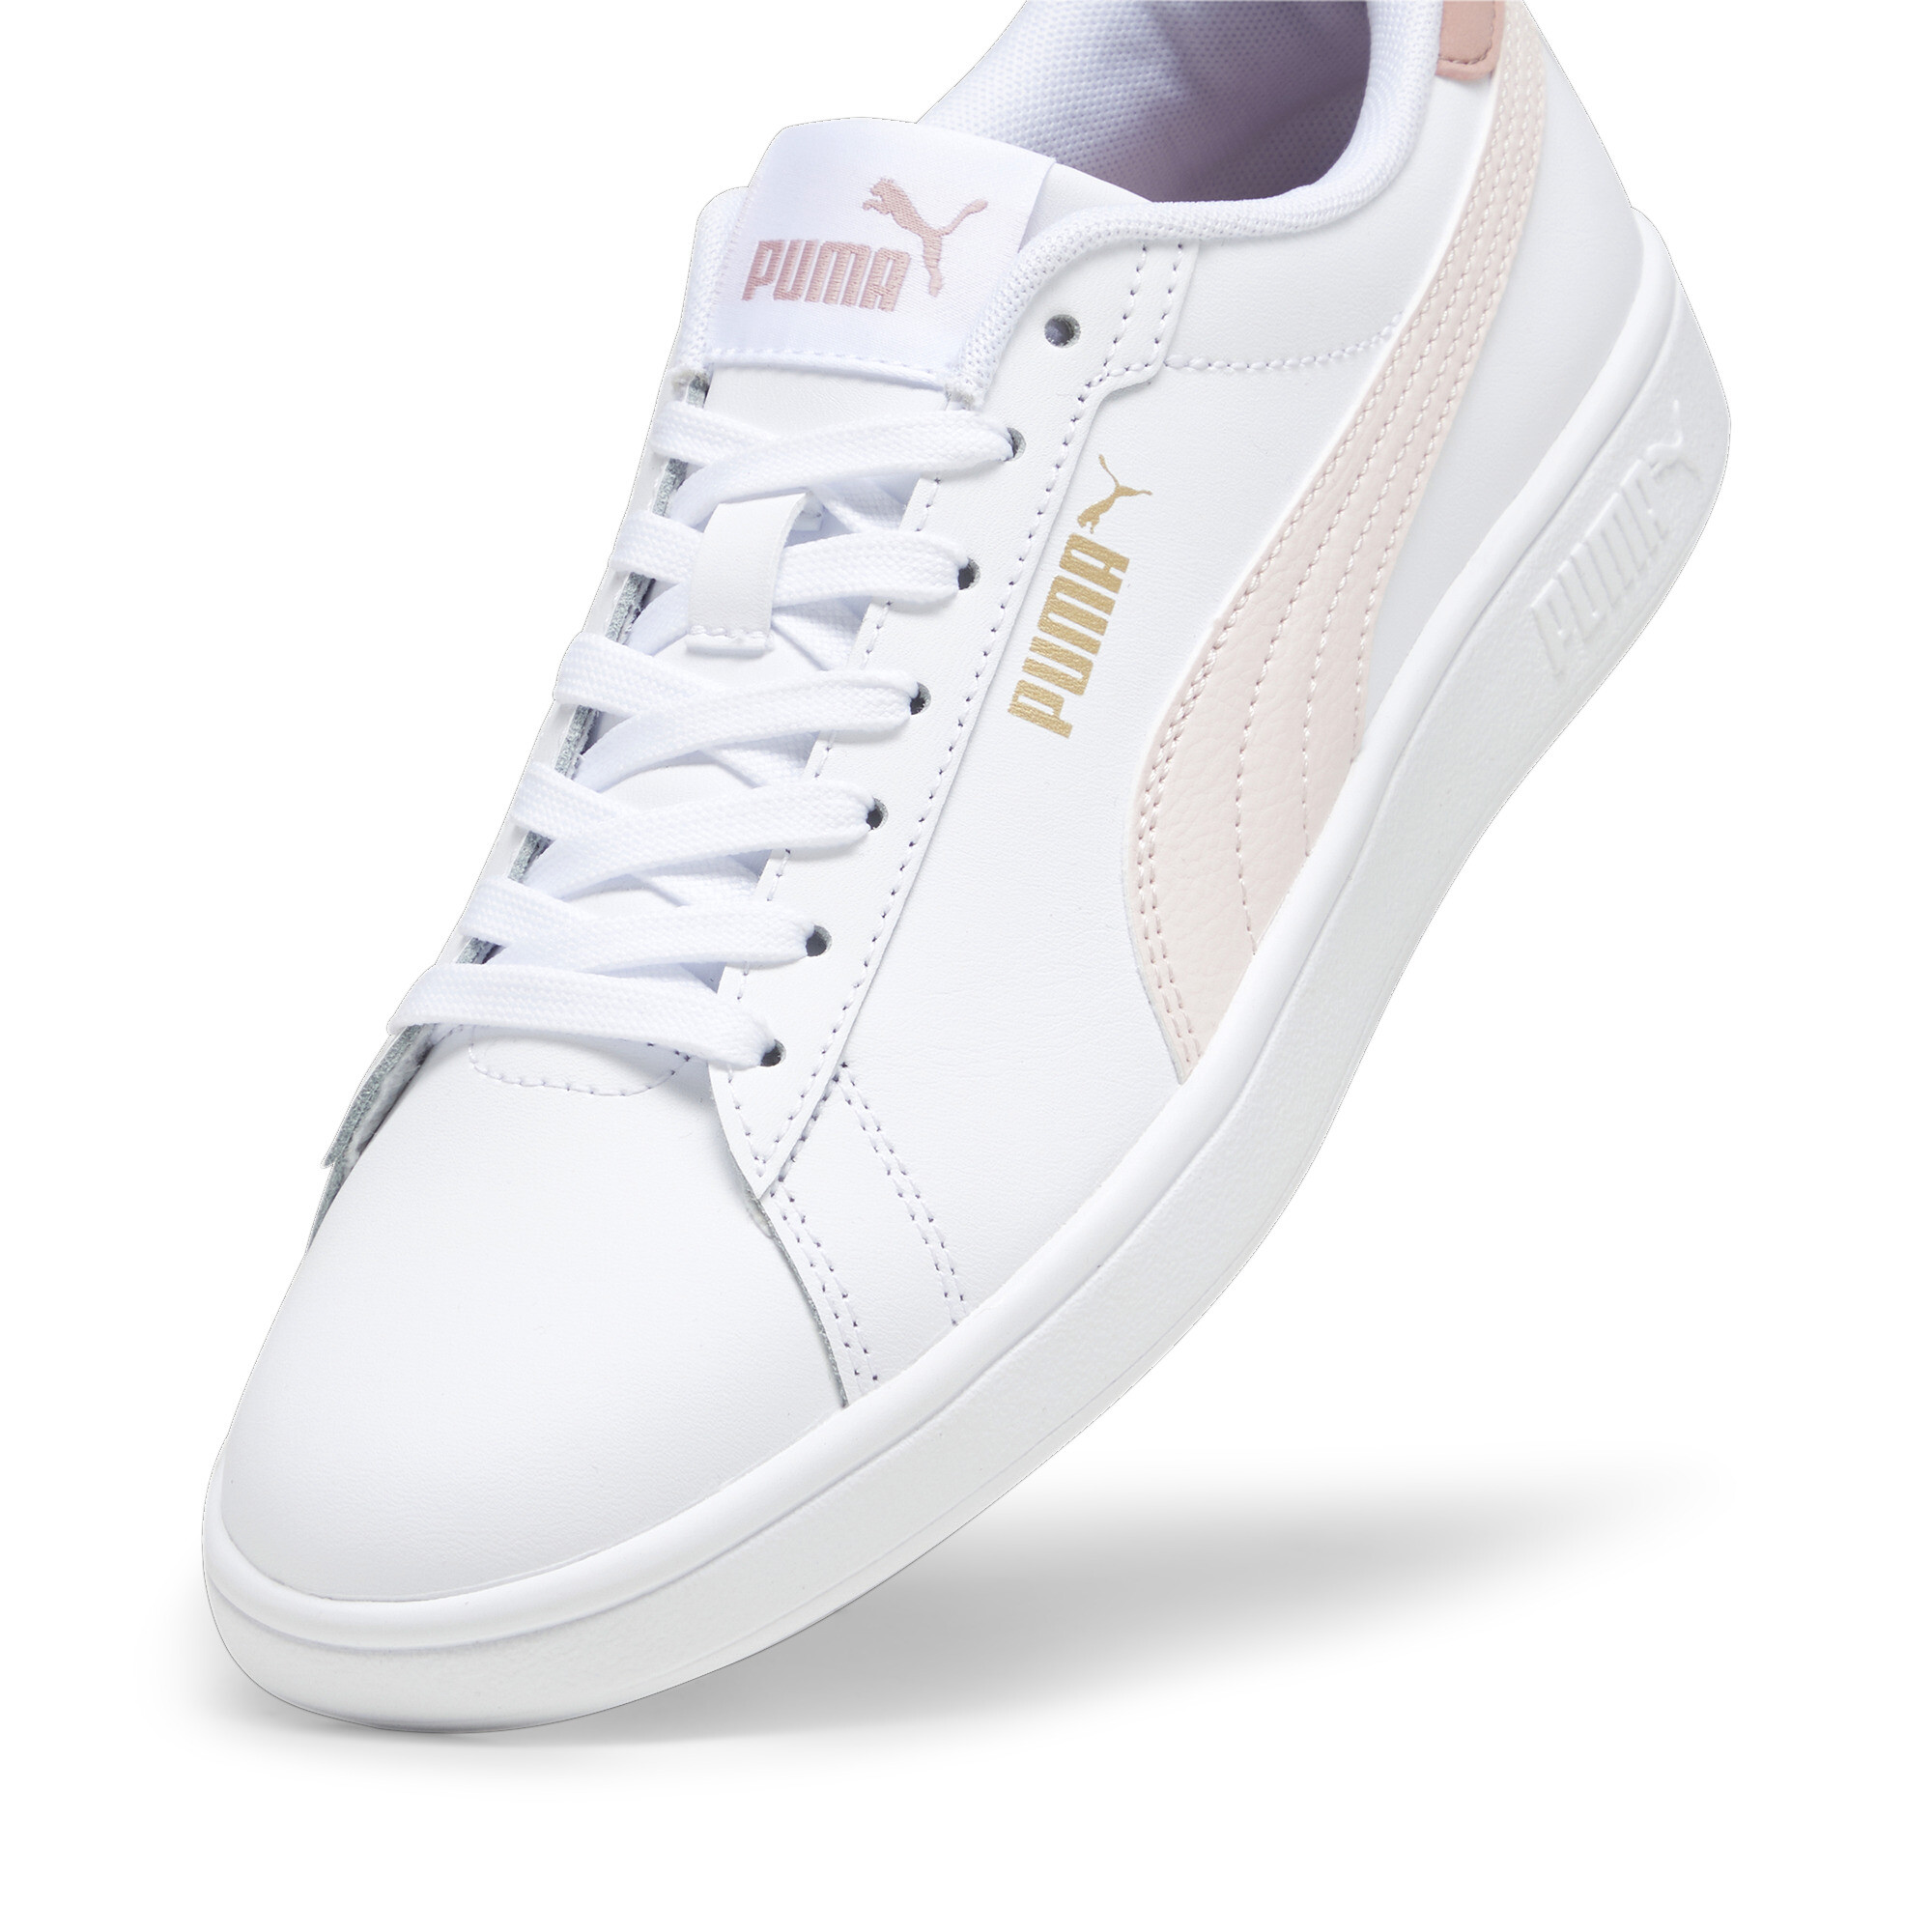 Puma Smash 3.0 L Sneakers, White, Size 47, Shoes